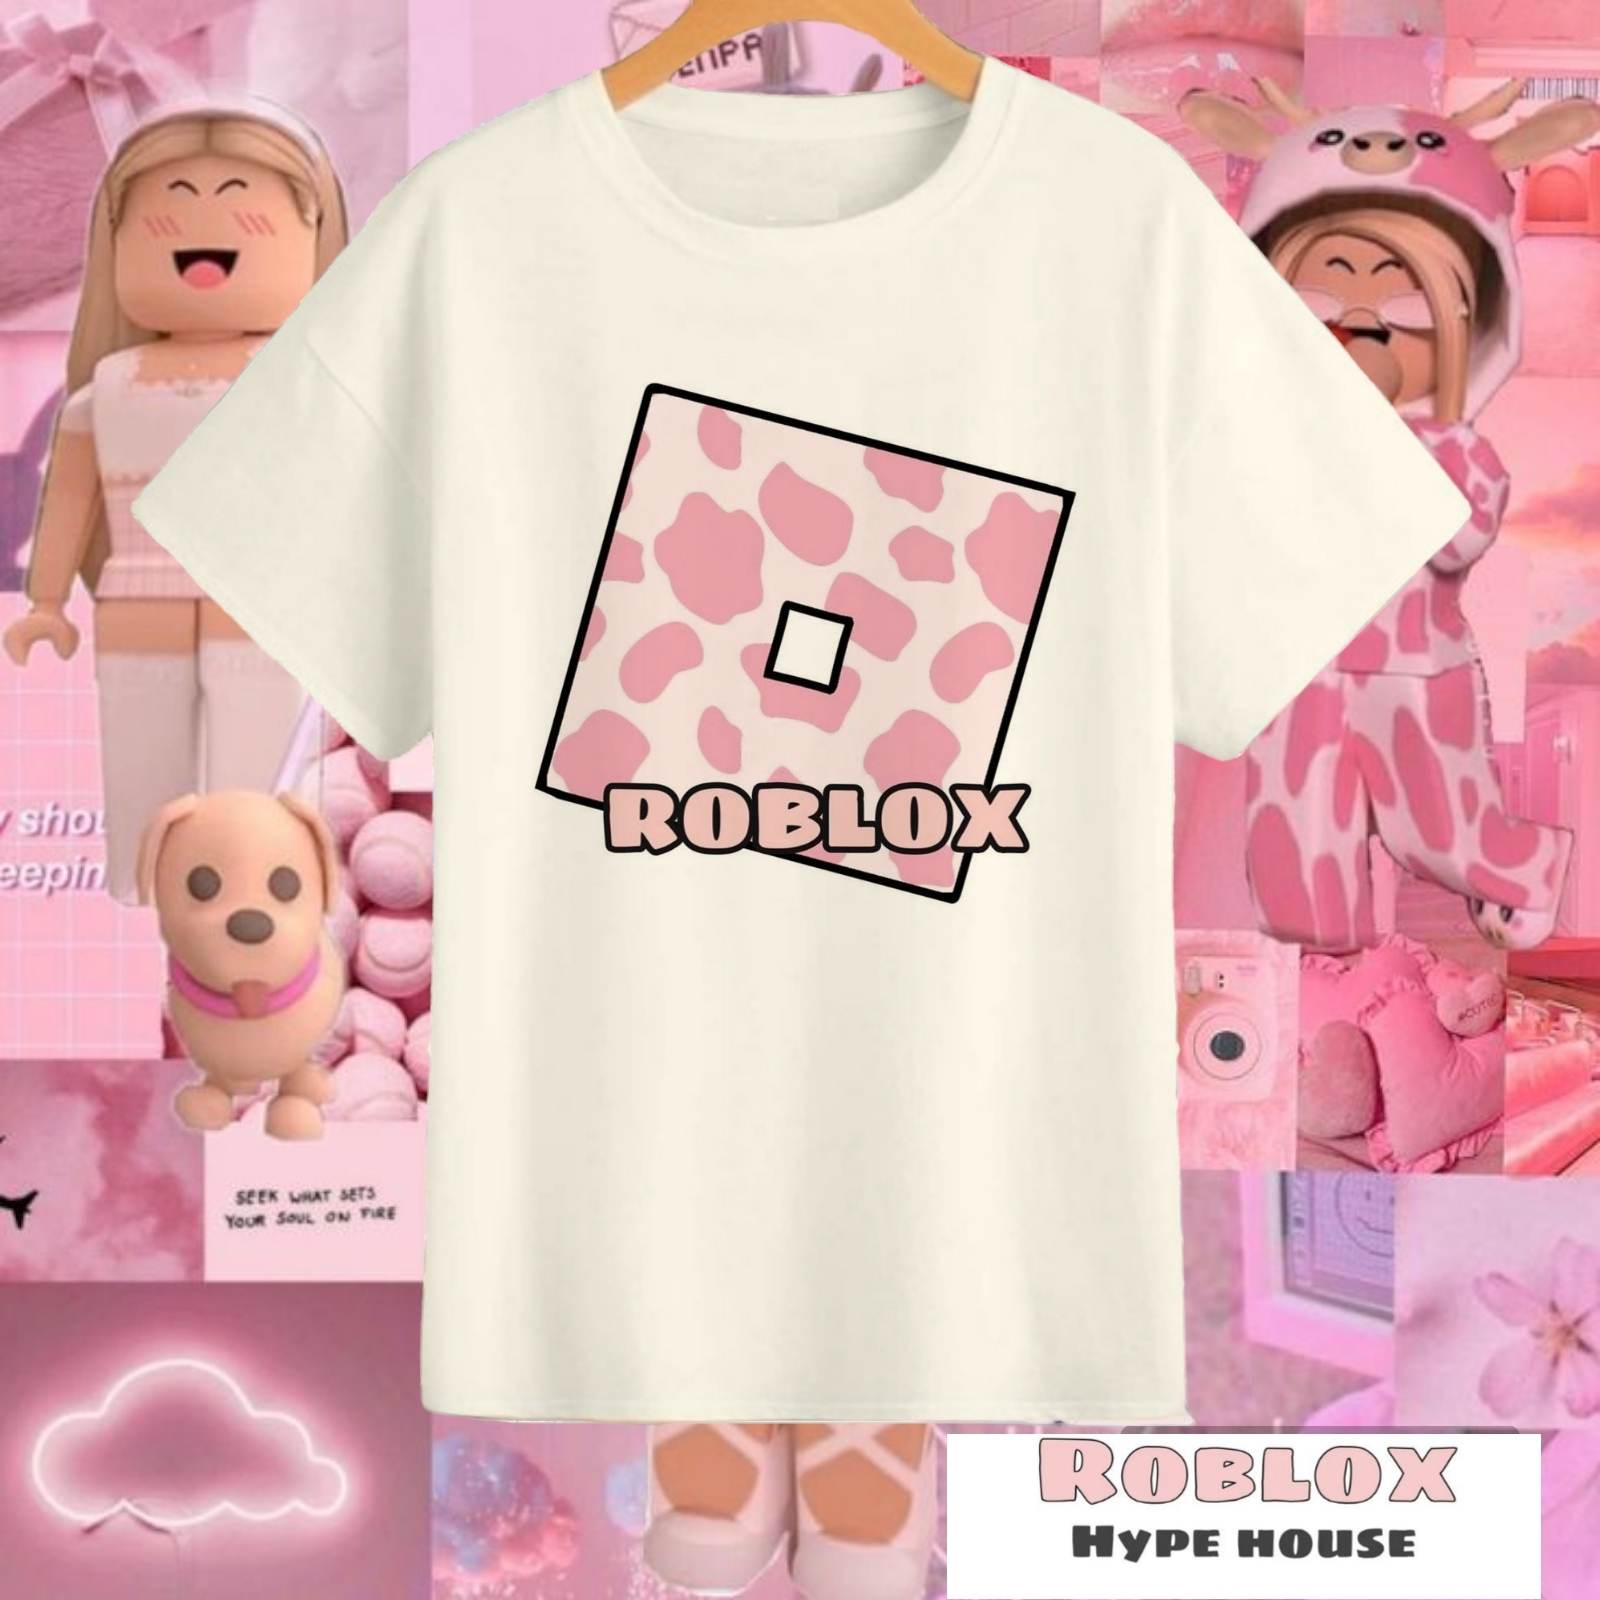 roblox t shirt for girls  Roblox t-shirt, Free t shirt design, Roblox t  shirts